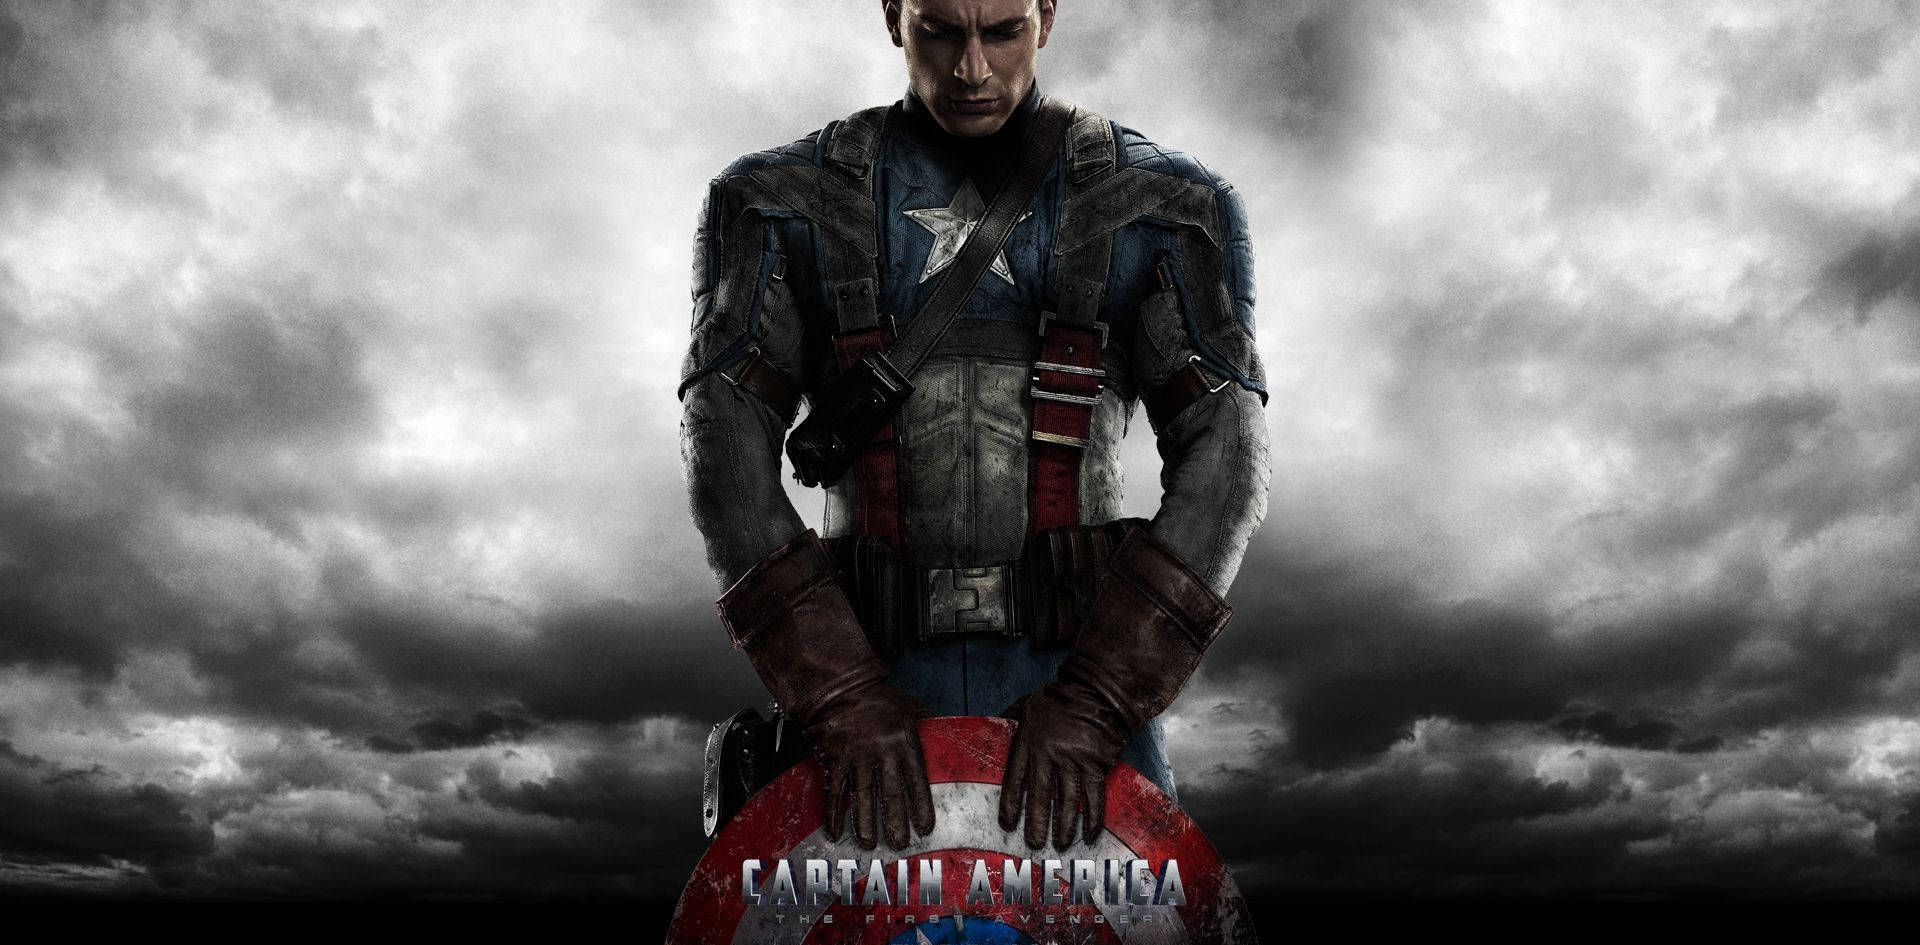 Captain America Superhero Movie Poster Background